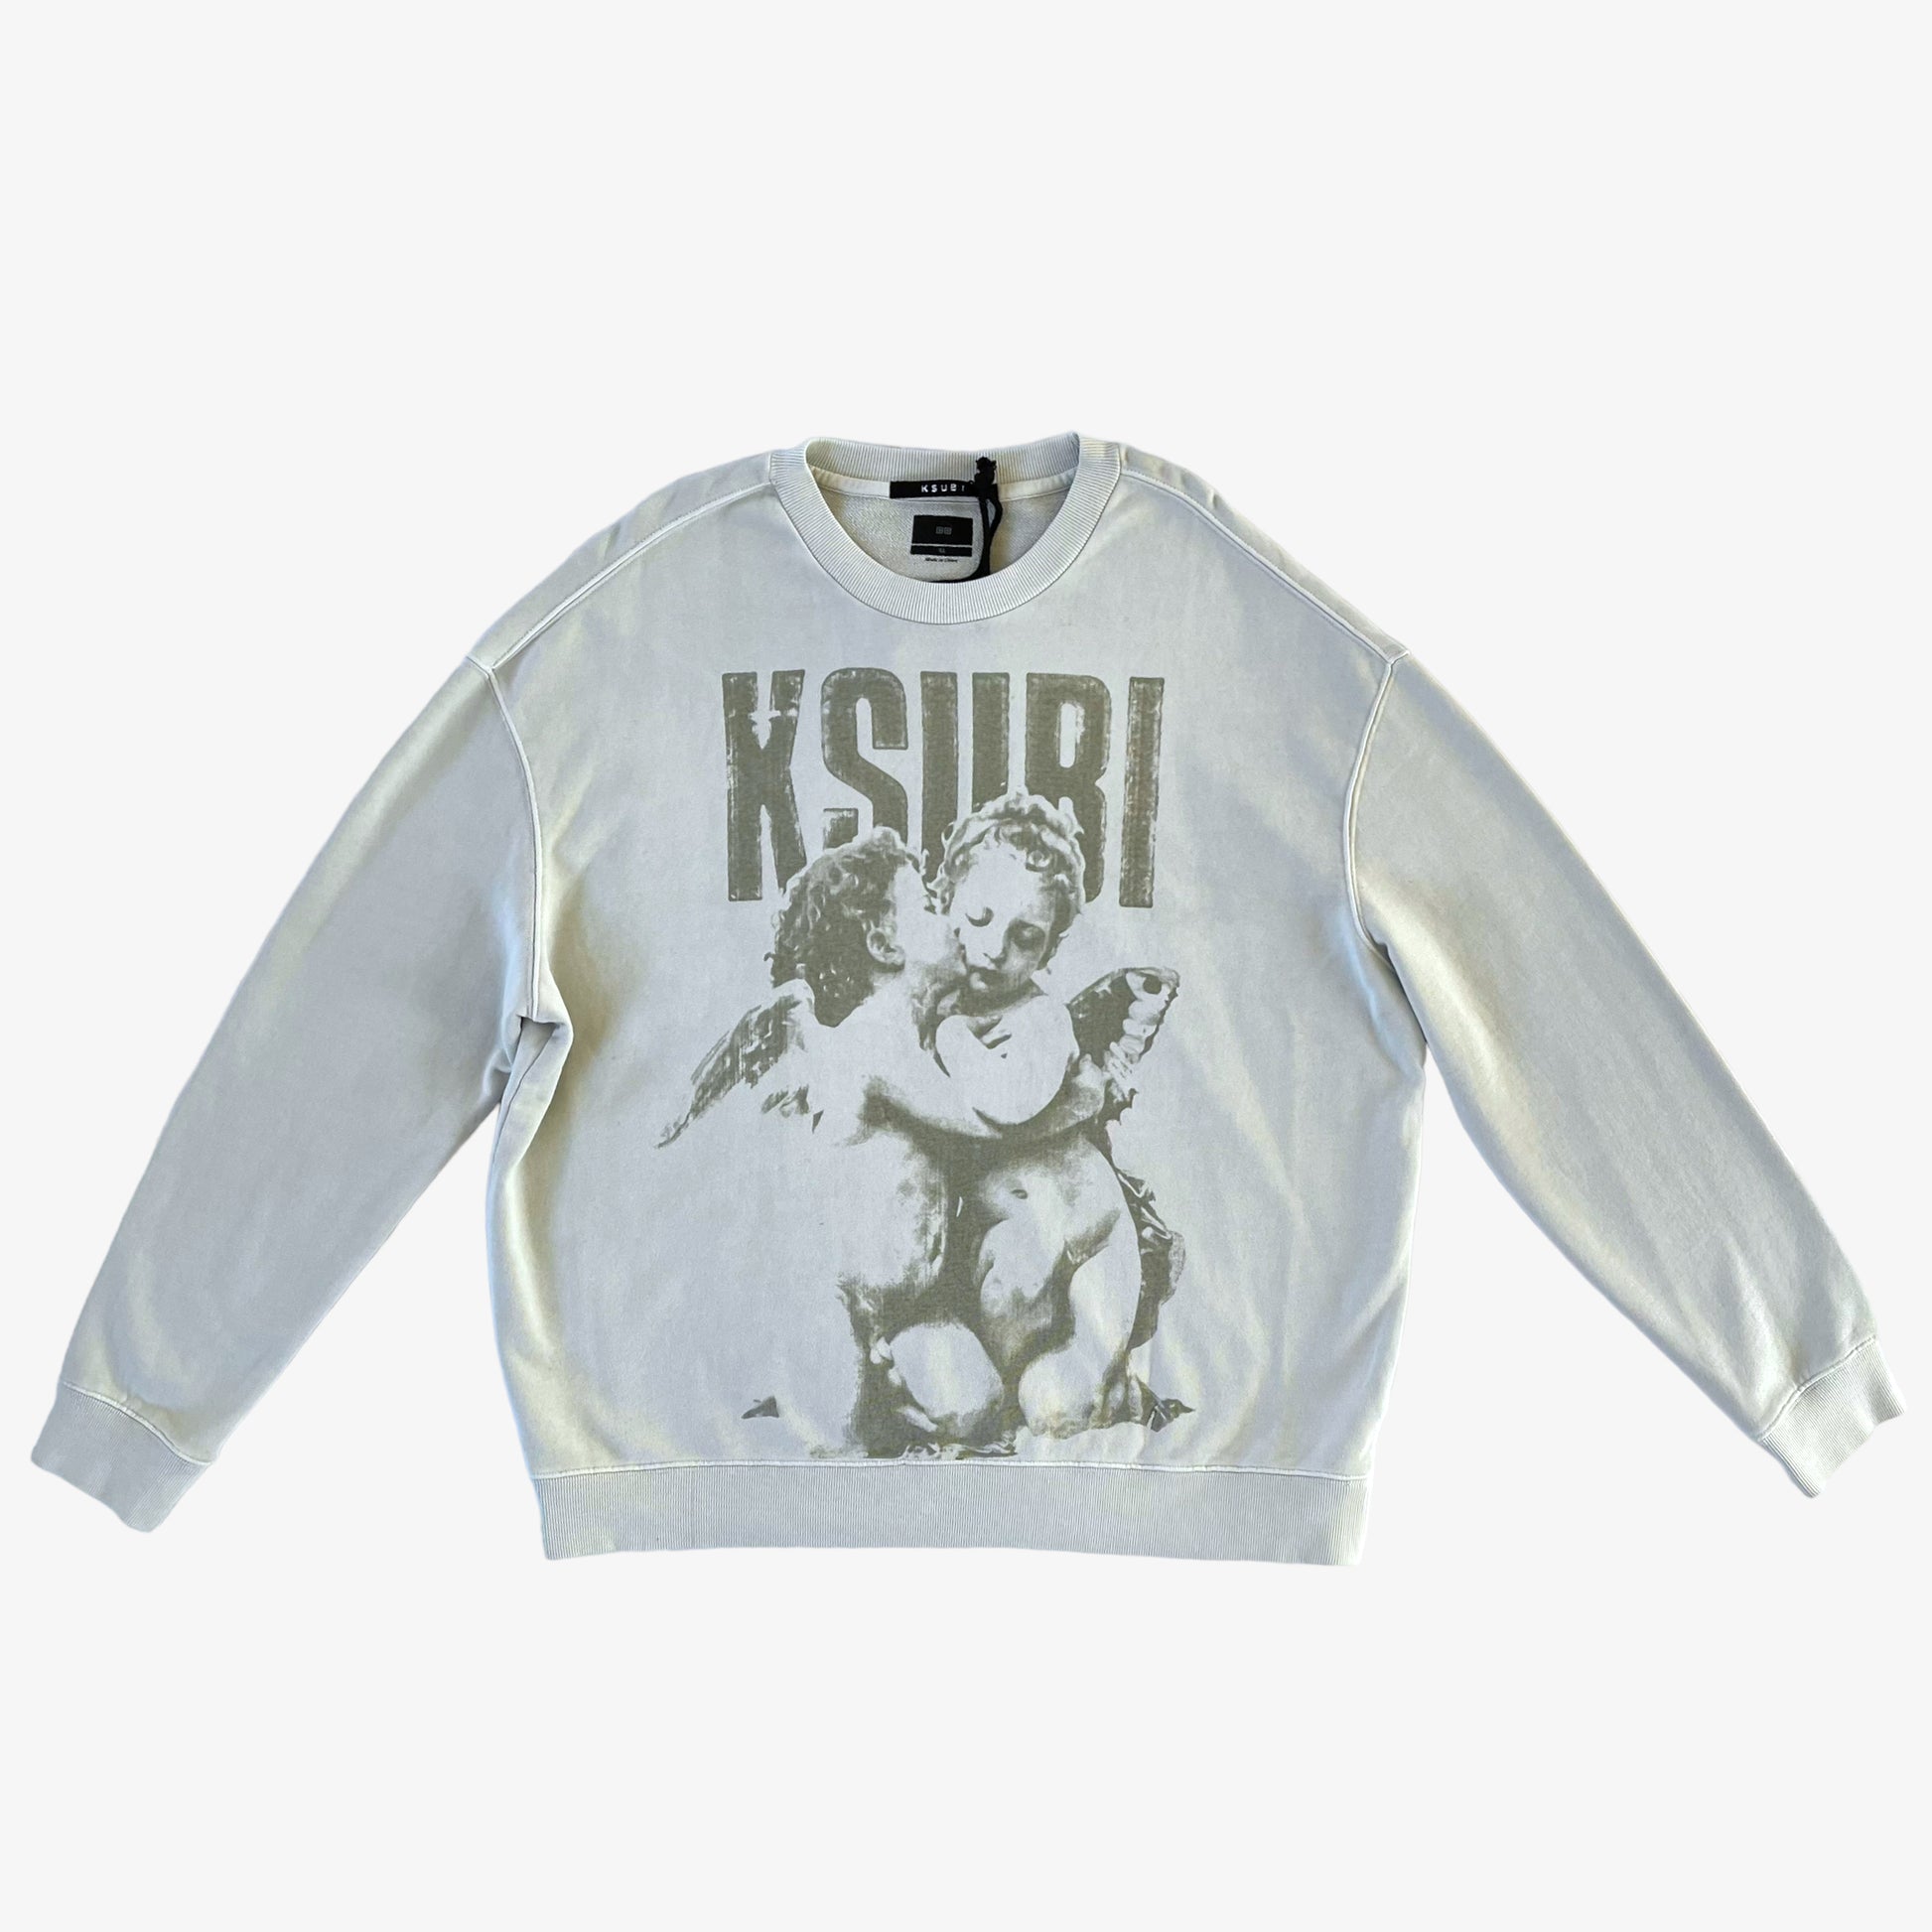 Ksubi High Lovers Crew Antike Sweatshirt Brand New With Tags - Casspios Dream